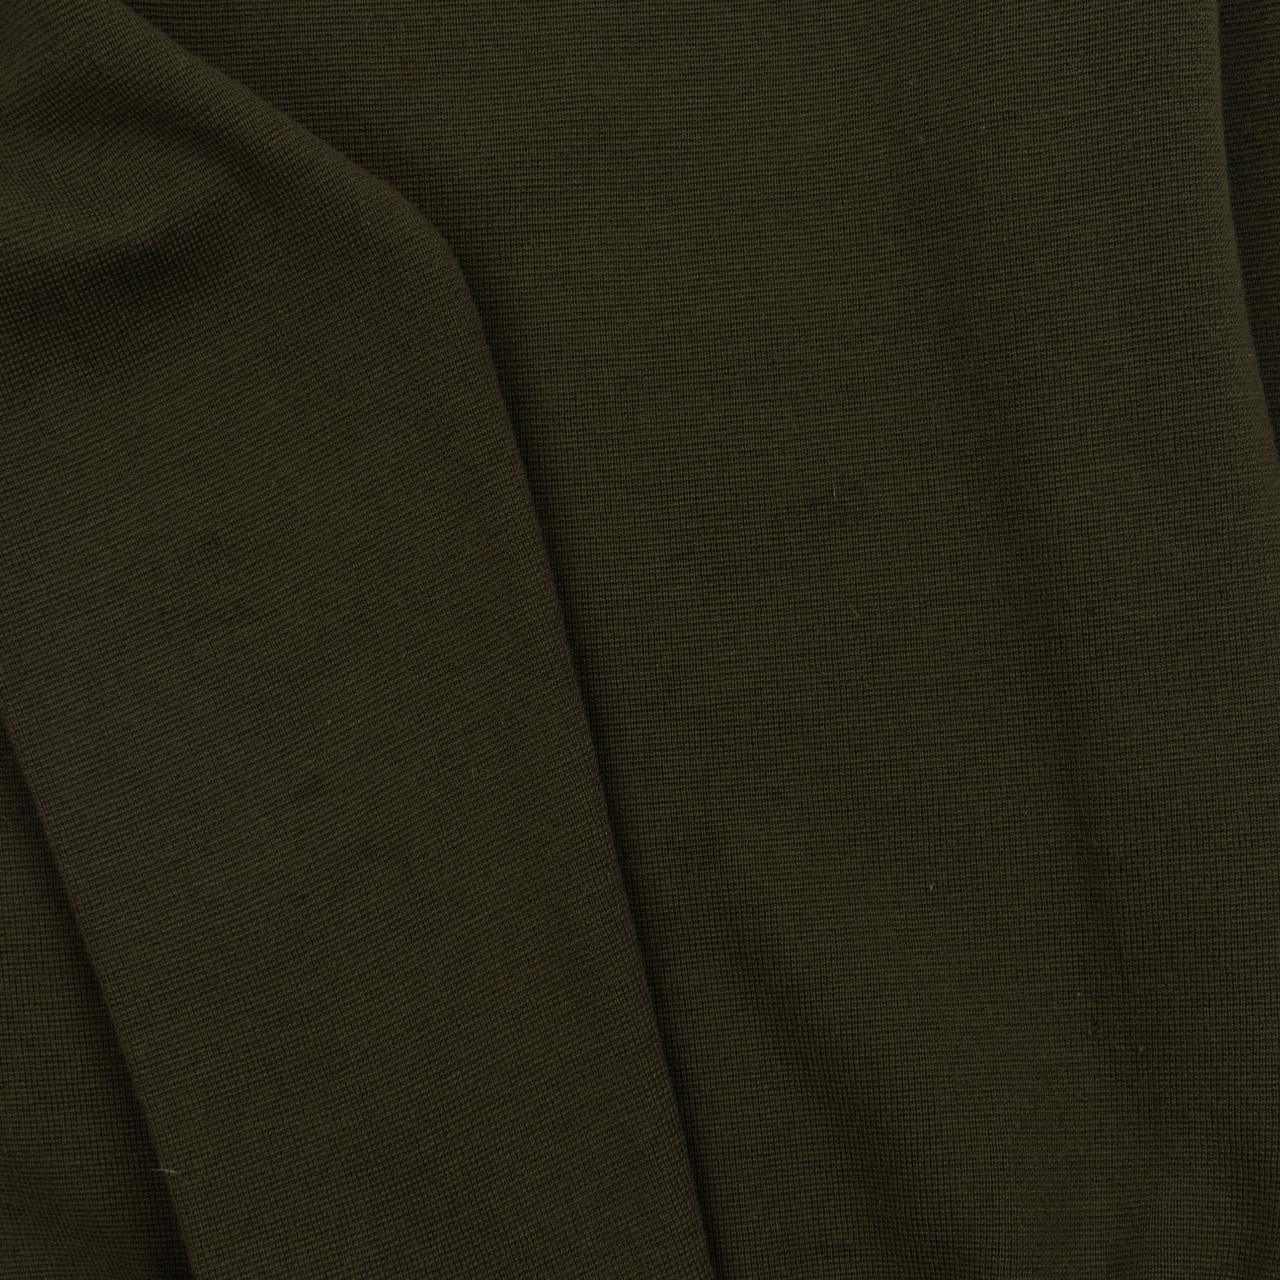 Vintage Prada Sport Sweatshirt Size XS - Known Source